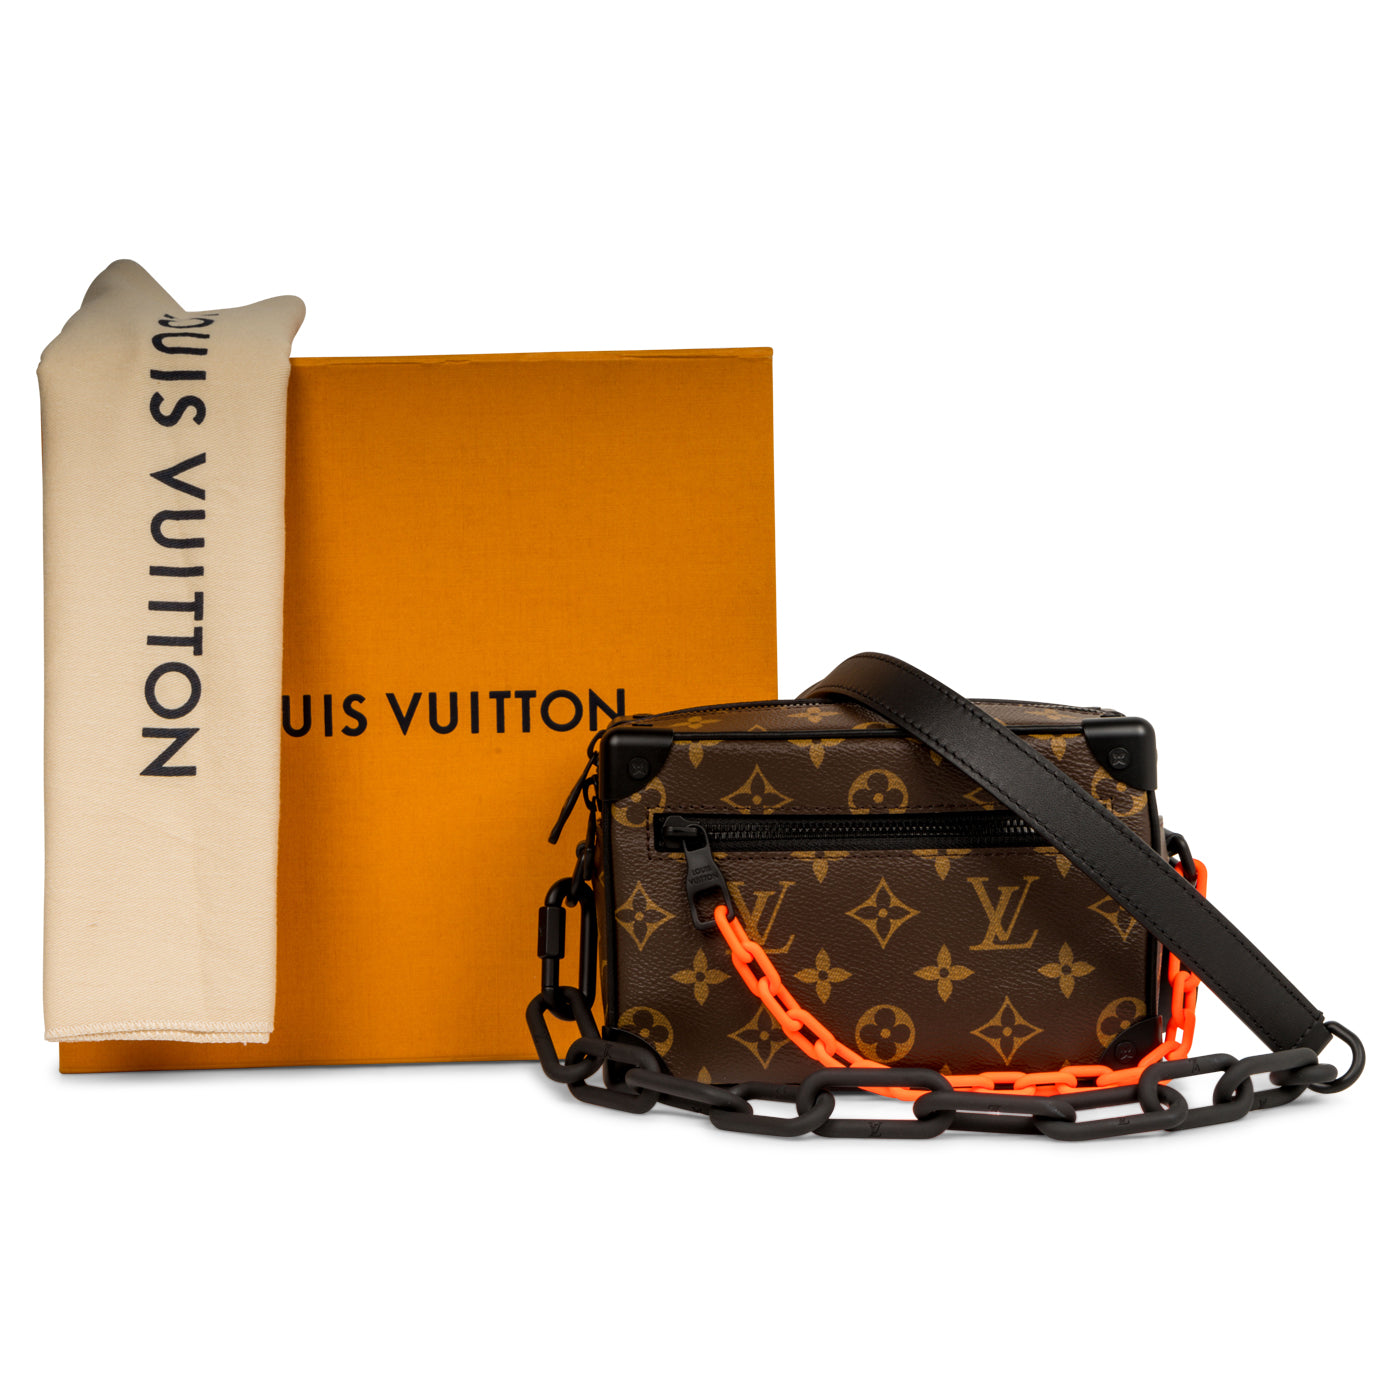 lv bag with orange chain